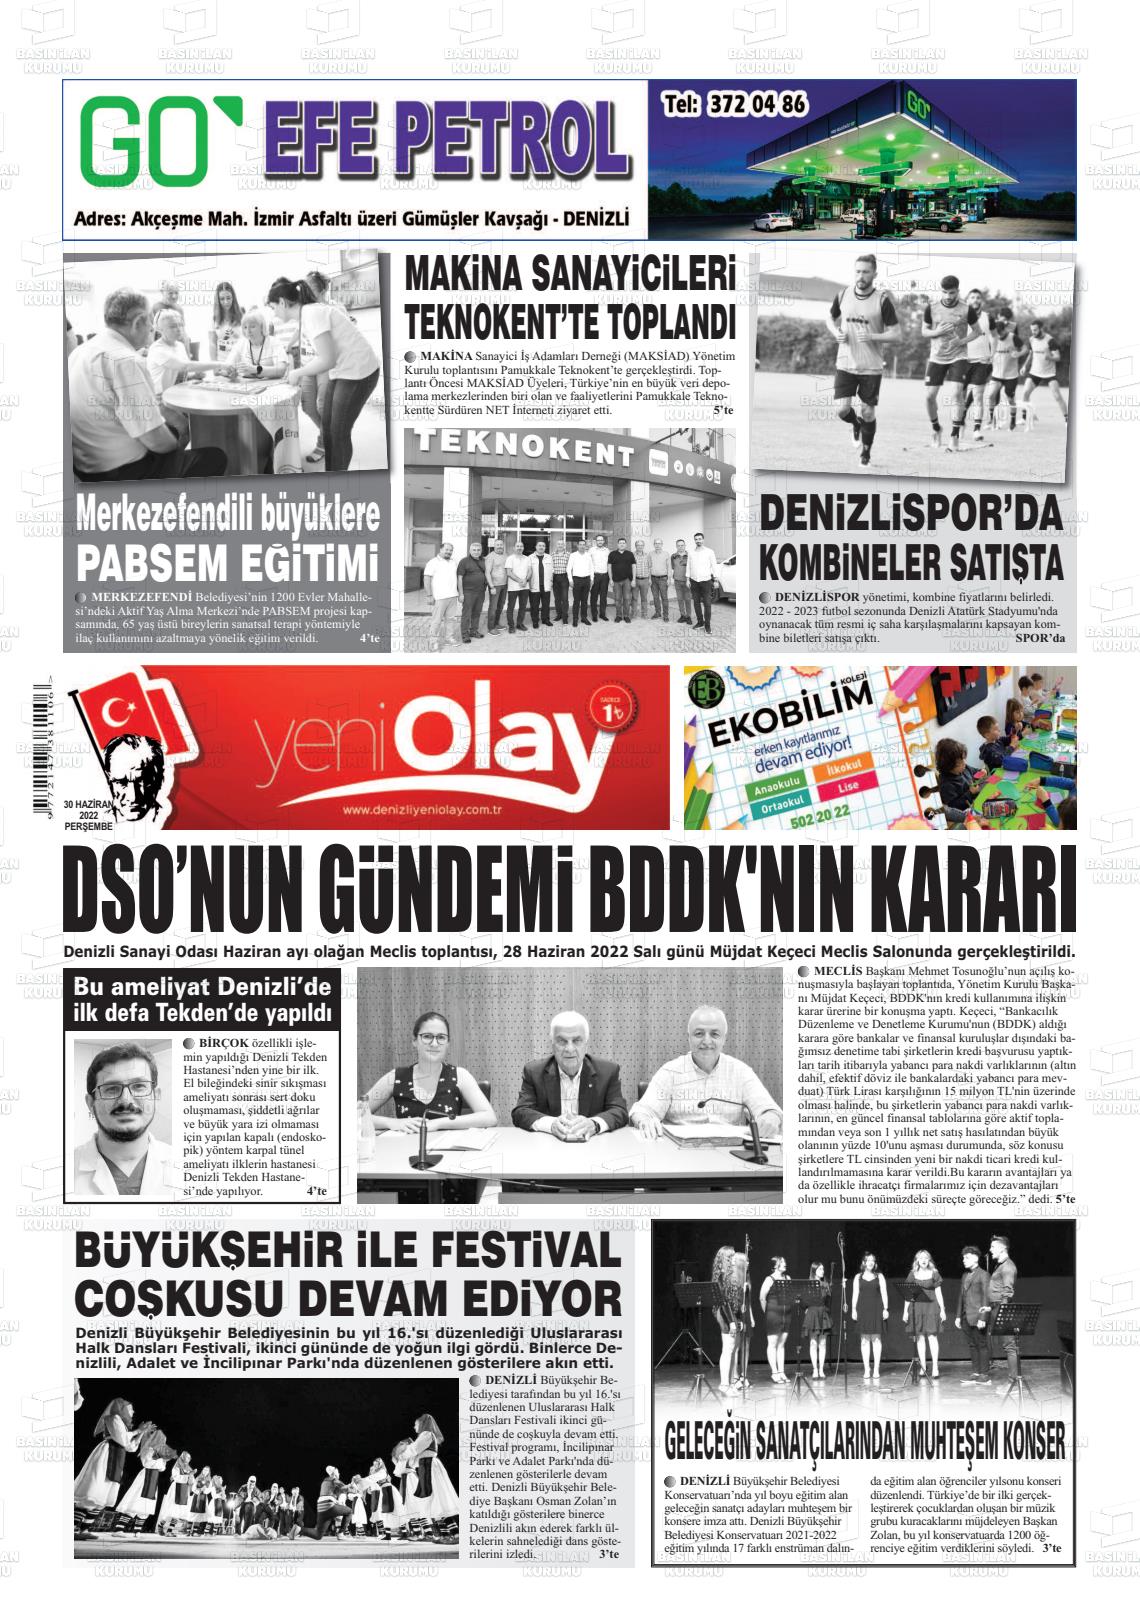 01 Temmuz 2022 Denizli Yeni Olay Gazete Manşeti